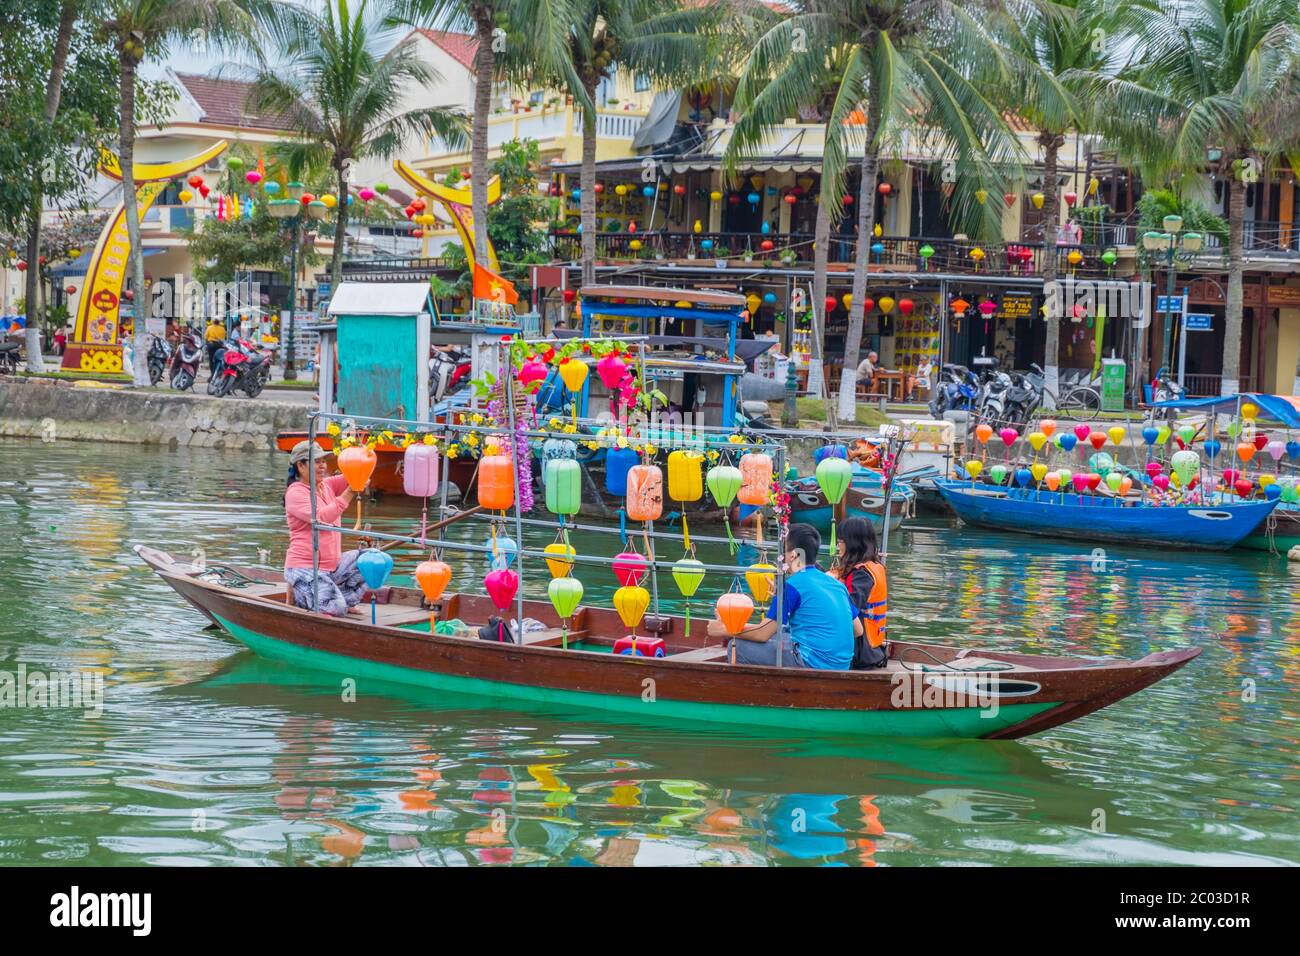 Traditionelle alte Stadt Fluss Bootsfahrt, Thu Bon River, Hoi an, Vietnam, Asien Stockfoto